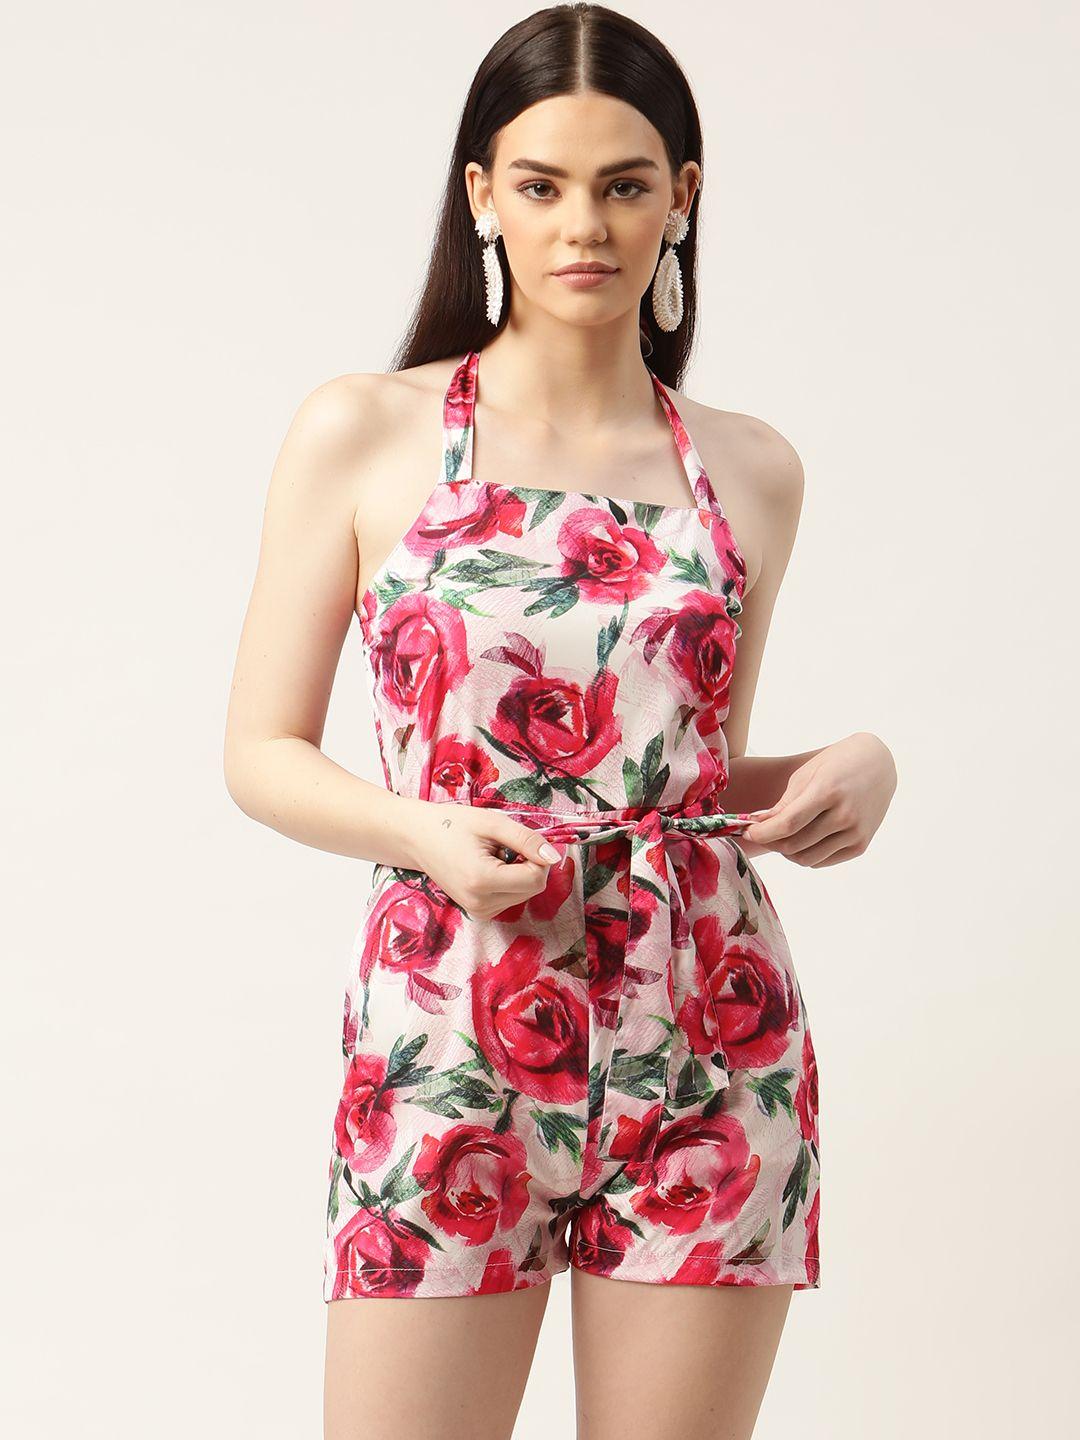 sleek-italia-off-white-&-pink-halter-neck-floral-printed-playsuit-&-belt